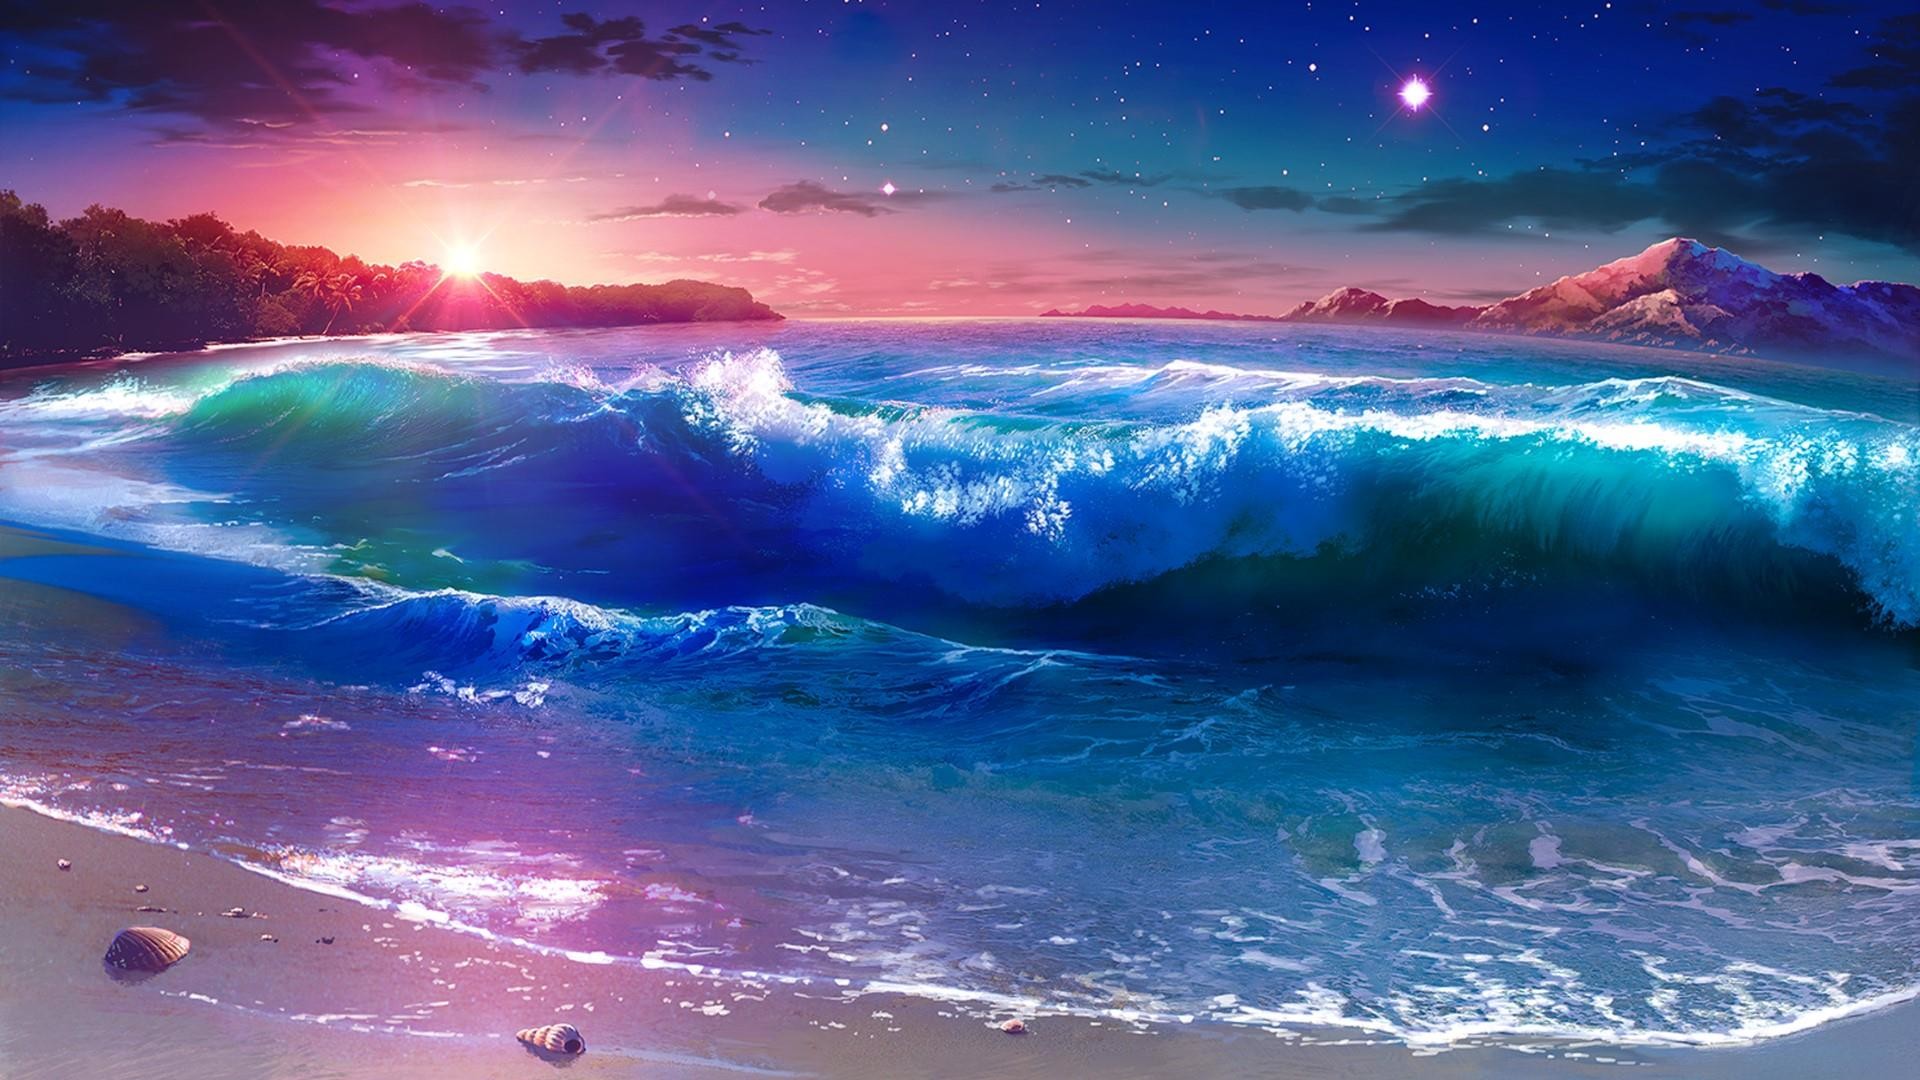 1920x1080 Title. Starry night over the seashore - Fantasy landscape